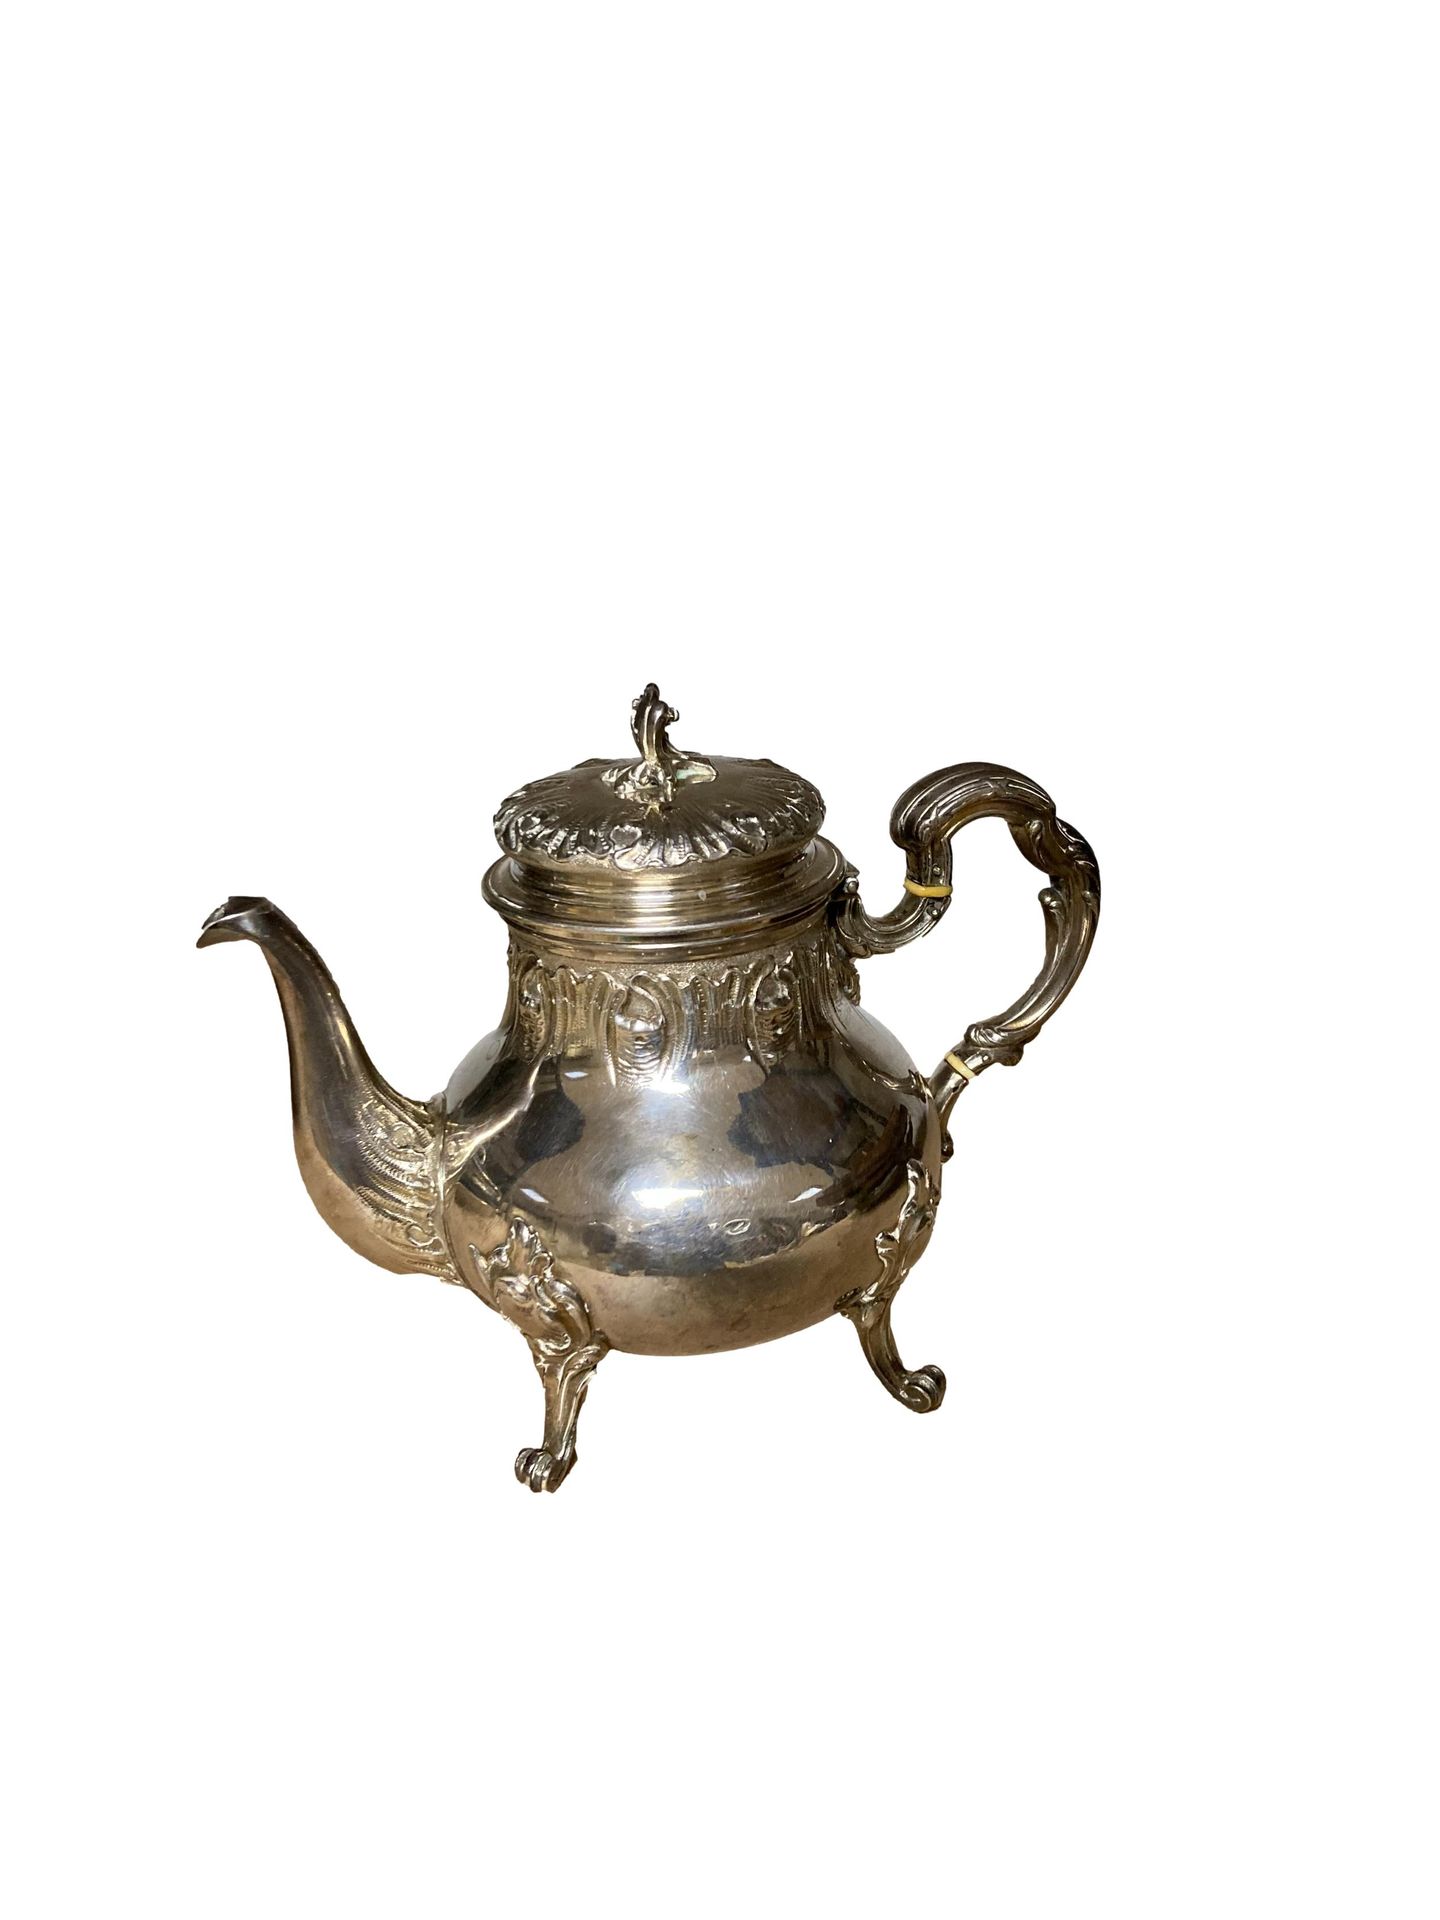 Null 罗盖尔装饰的四脚银茶壶

密涅瓦标志

H.14,5 cm

重量：290克